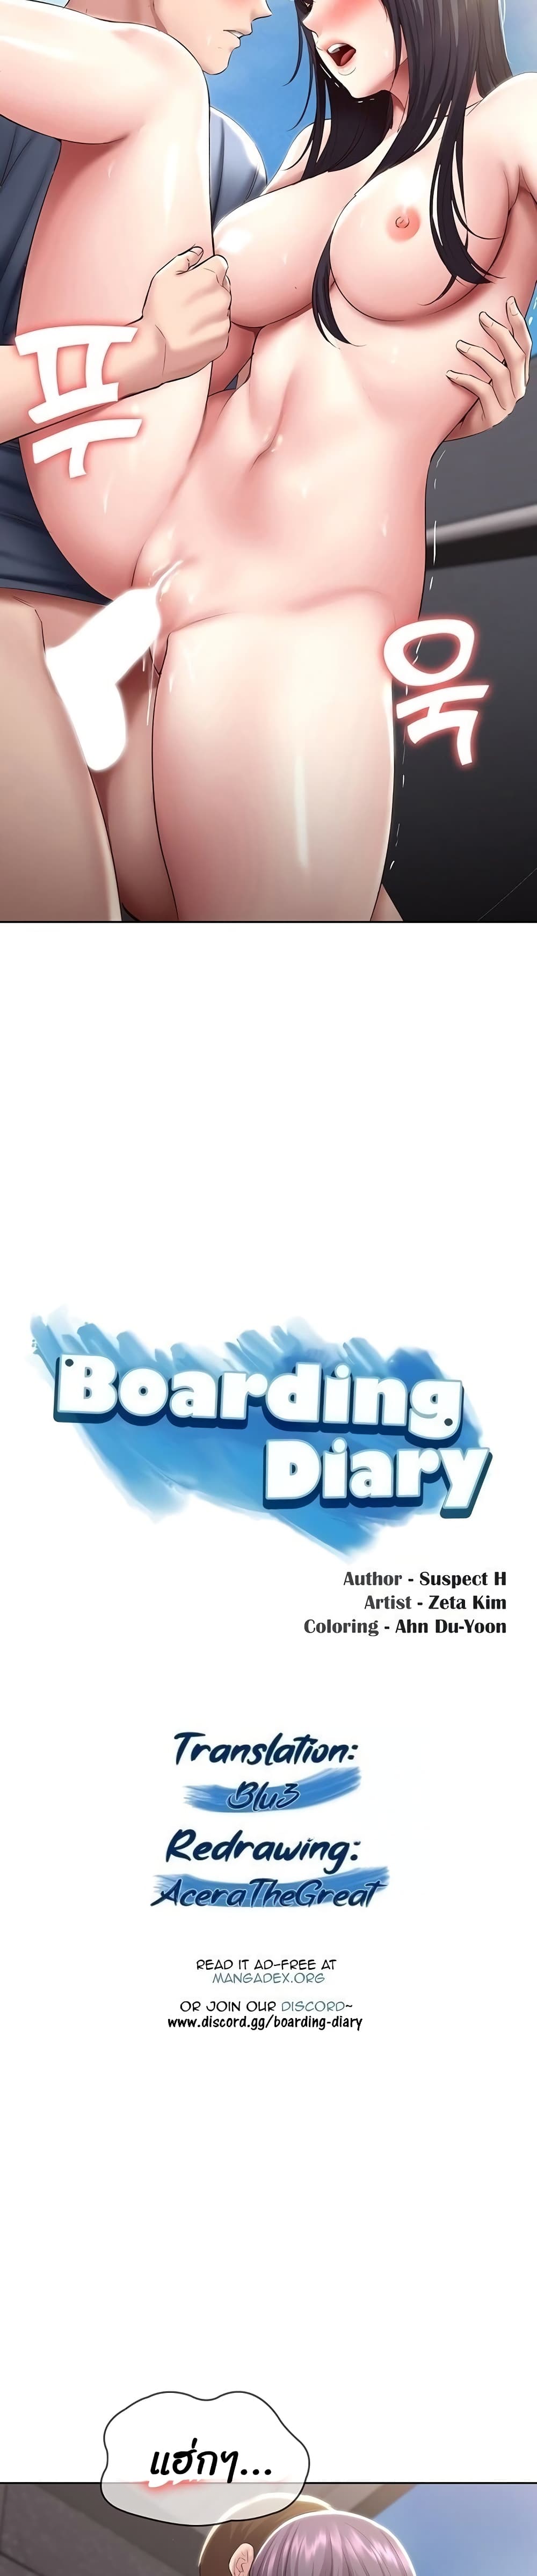 Boarding Diary 86-86